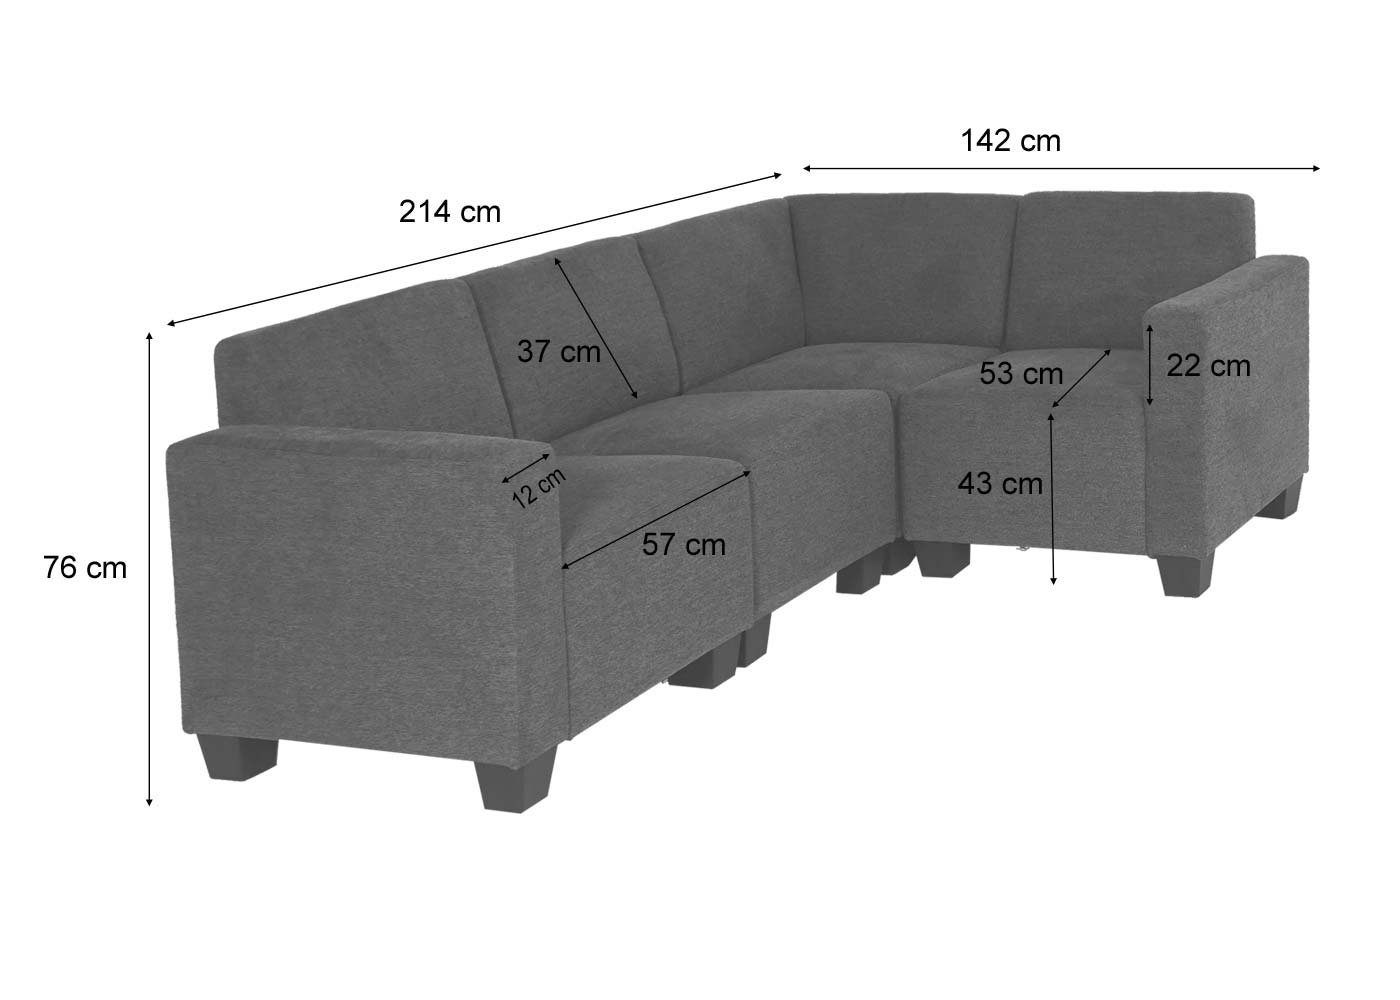 grau Sitzplatz: MCW kg, Set 5 grau Moncalieri-4-1-S, Maximale | Teile, Clipsystem Belastbarkeit pro 150 Sofa